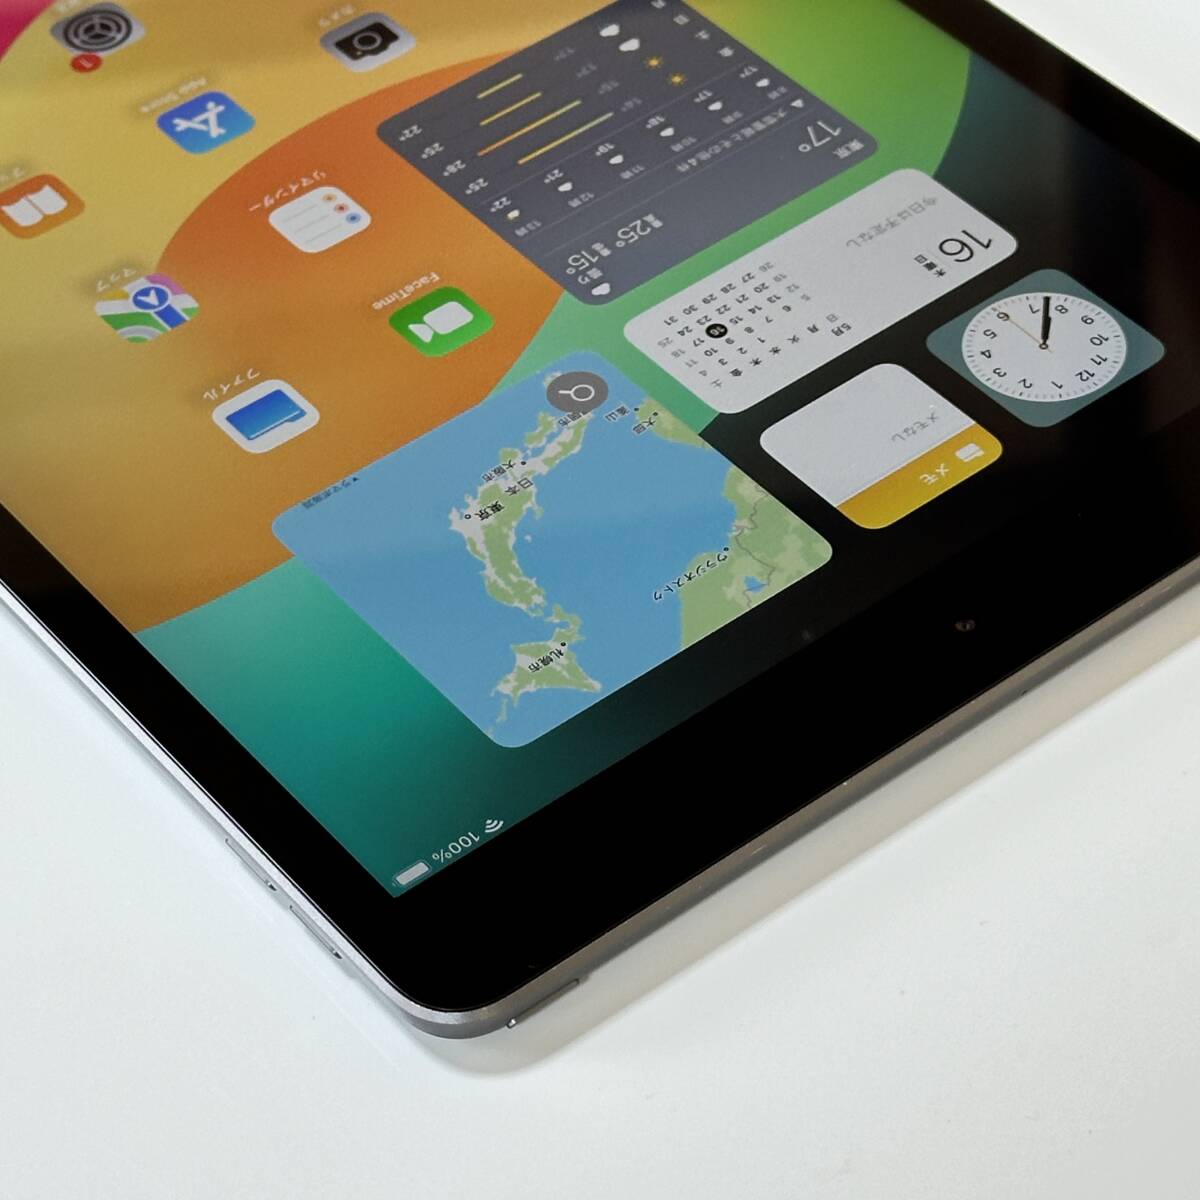 Apple iPad ( no. 7 generation ) Space gray 32GB MW742J/A Wi-Fi model iOS17.5 Acty beige .n lock released 